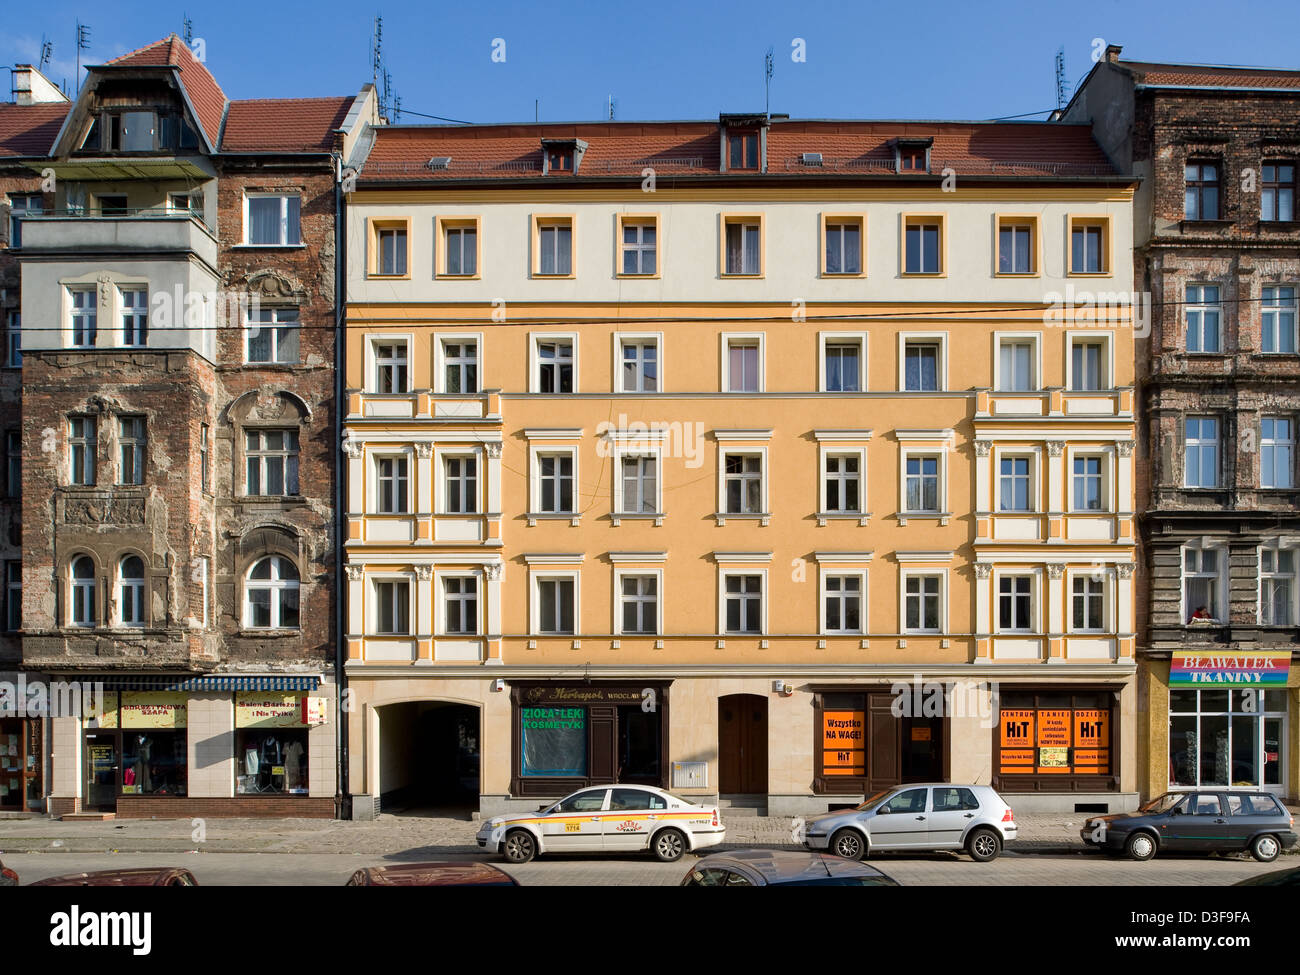 Wroclaw (Breslau), Poland, unrefurbished and refurbished residential house adjacent Stock Photo